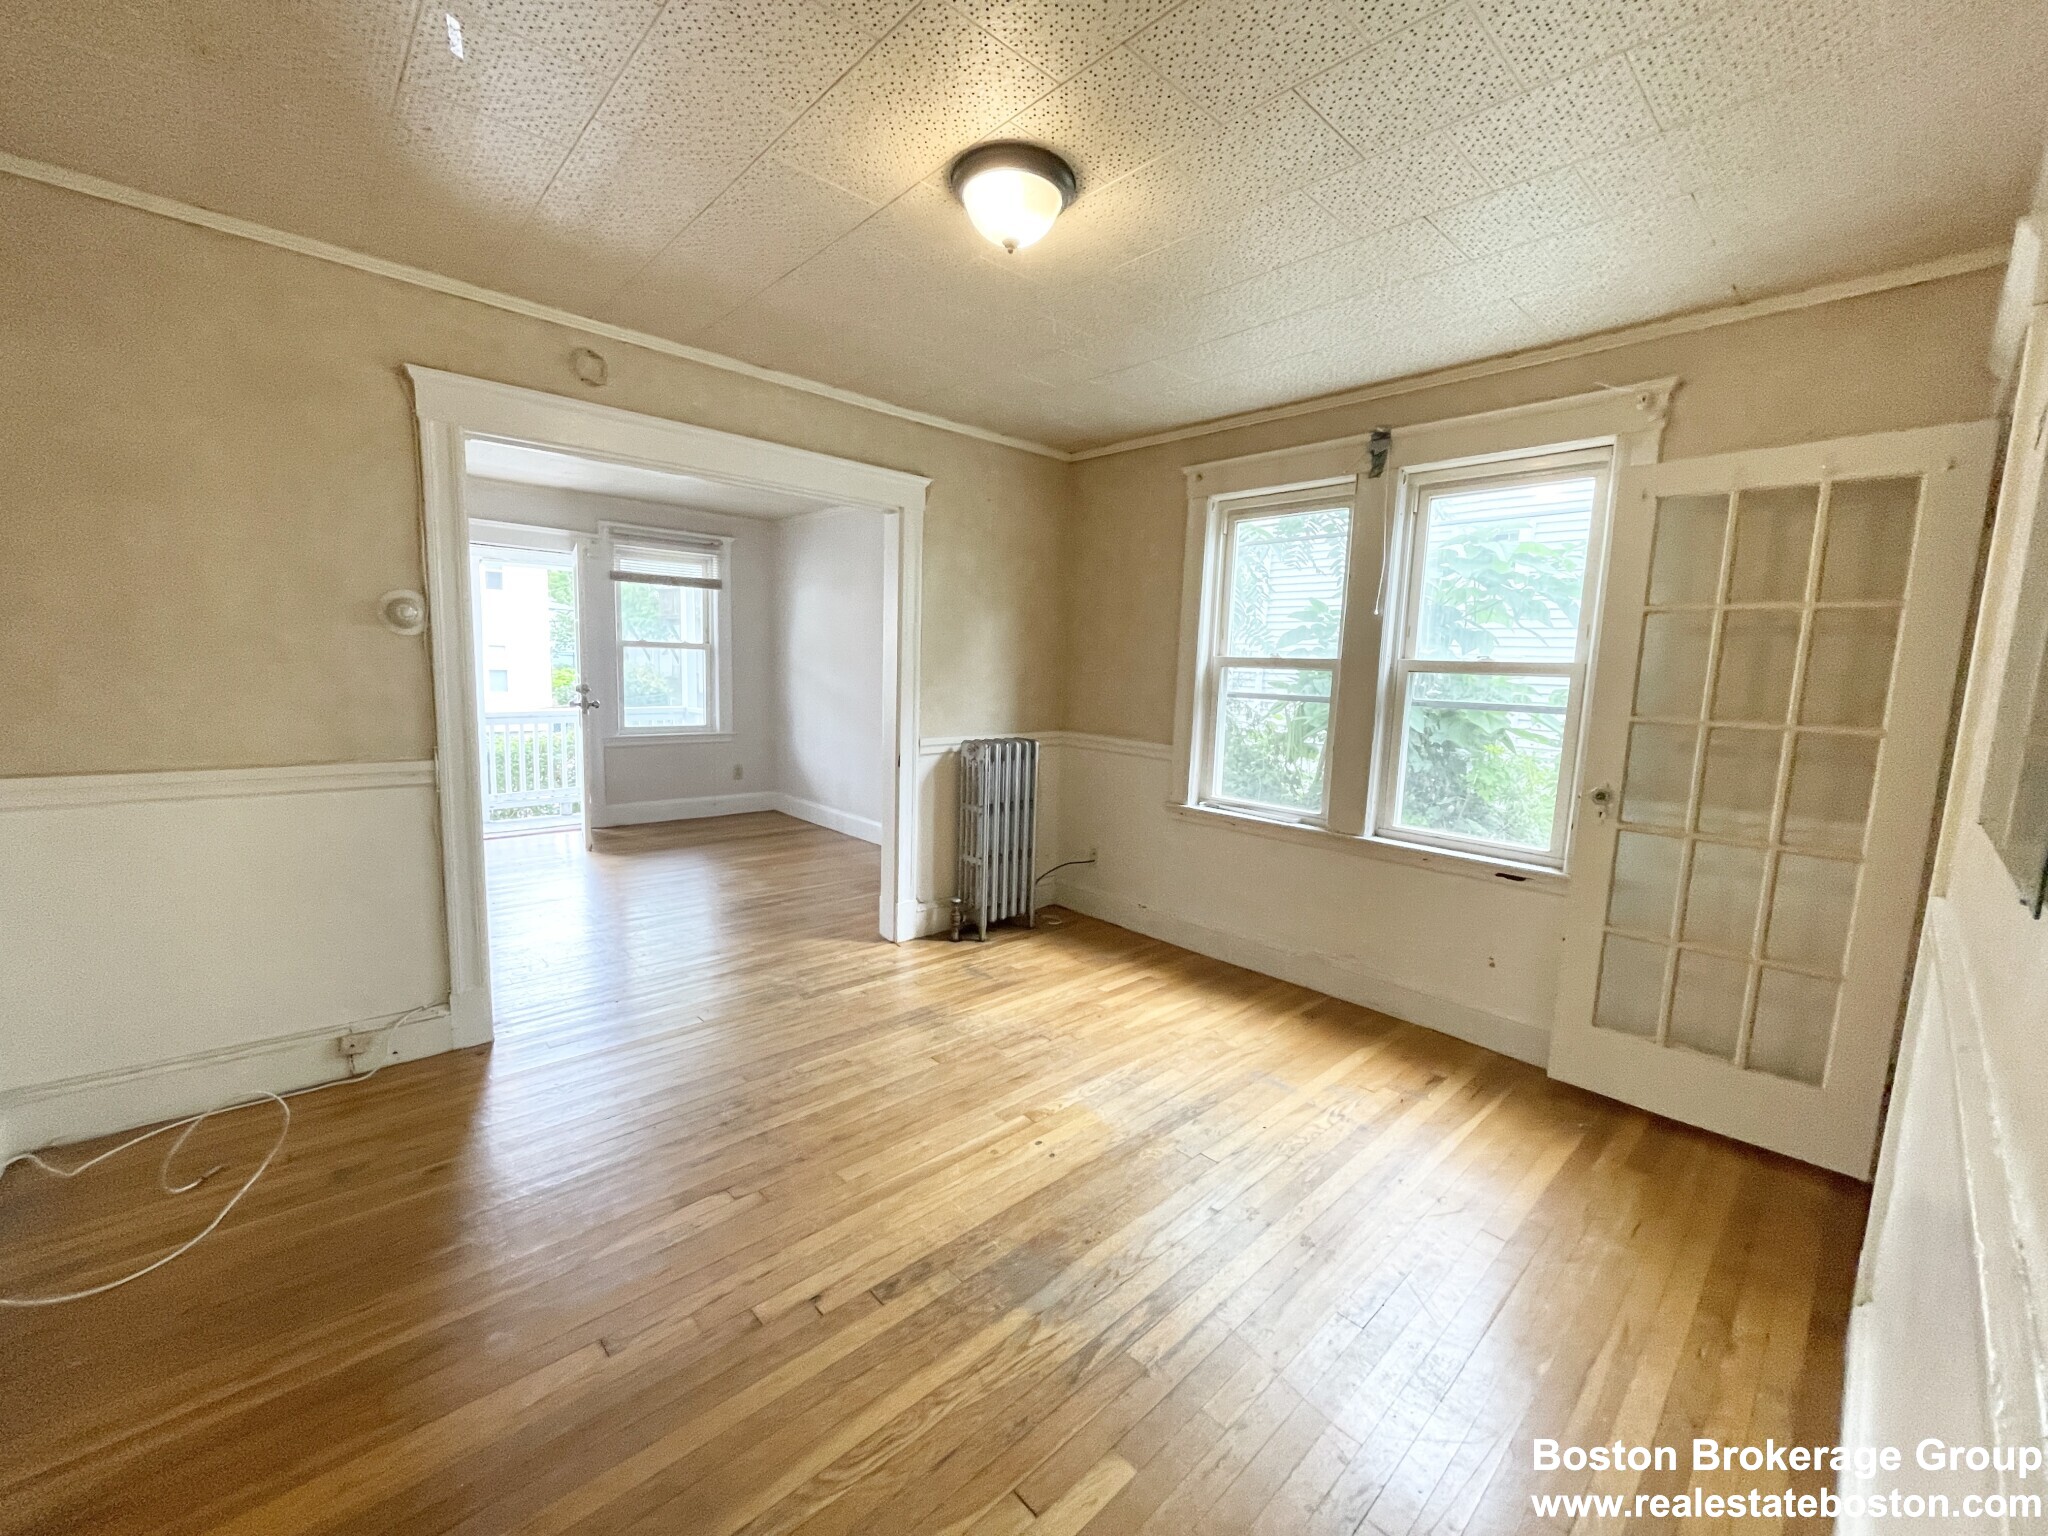 Photos of apartment on Mission,Boston MA 02120